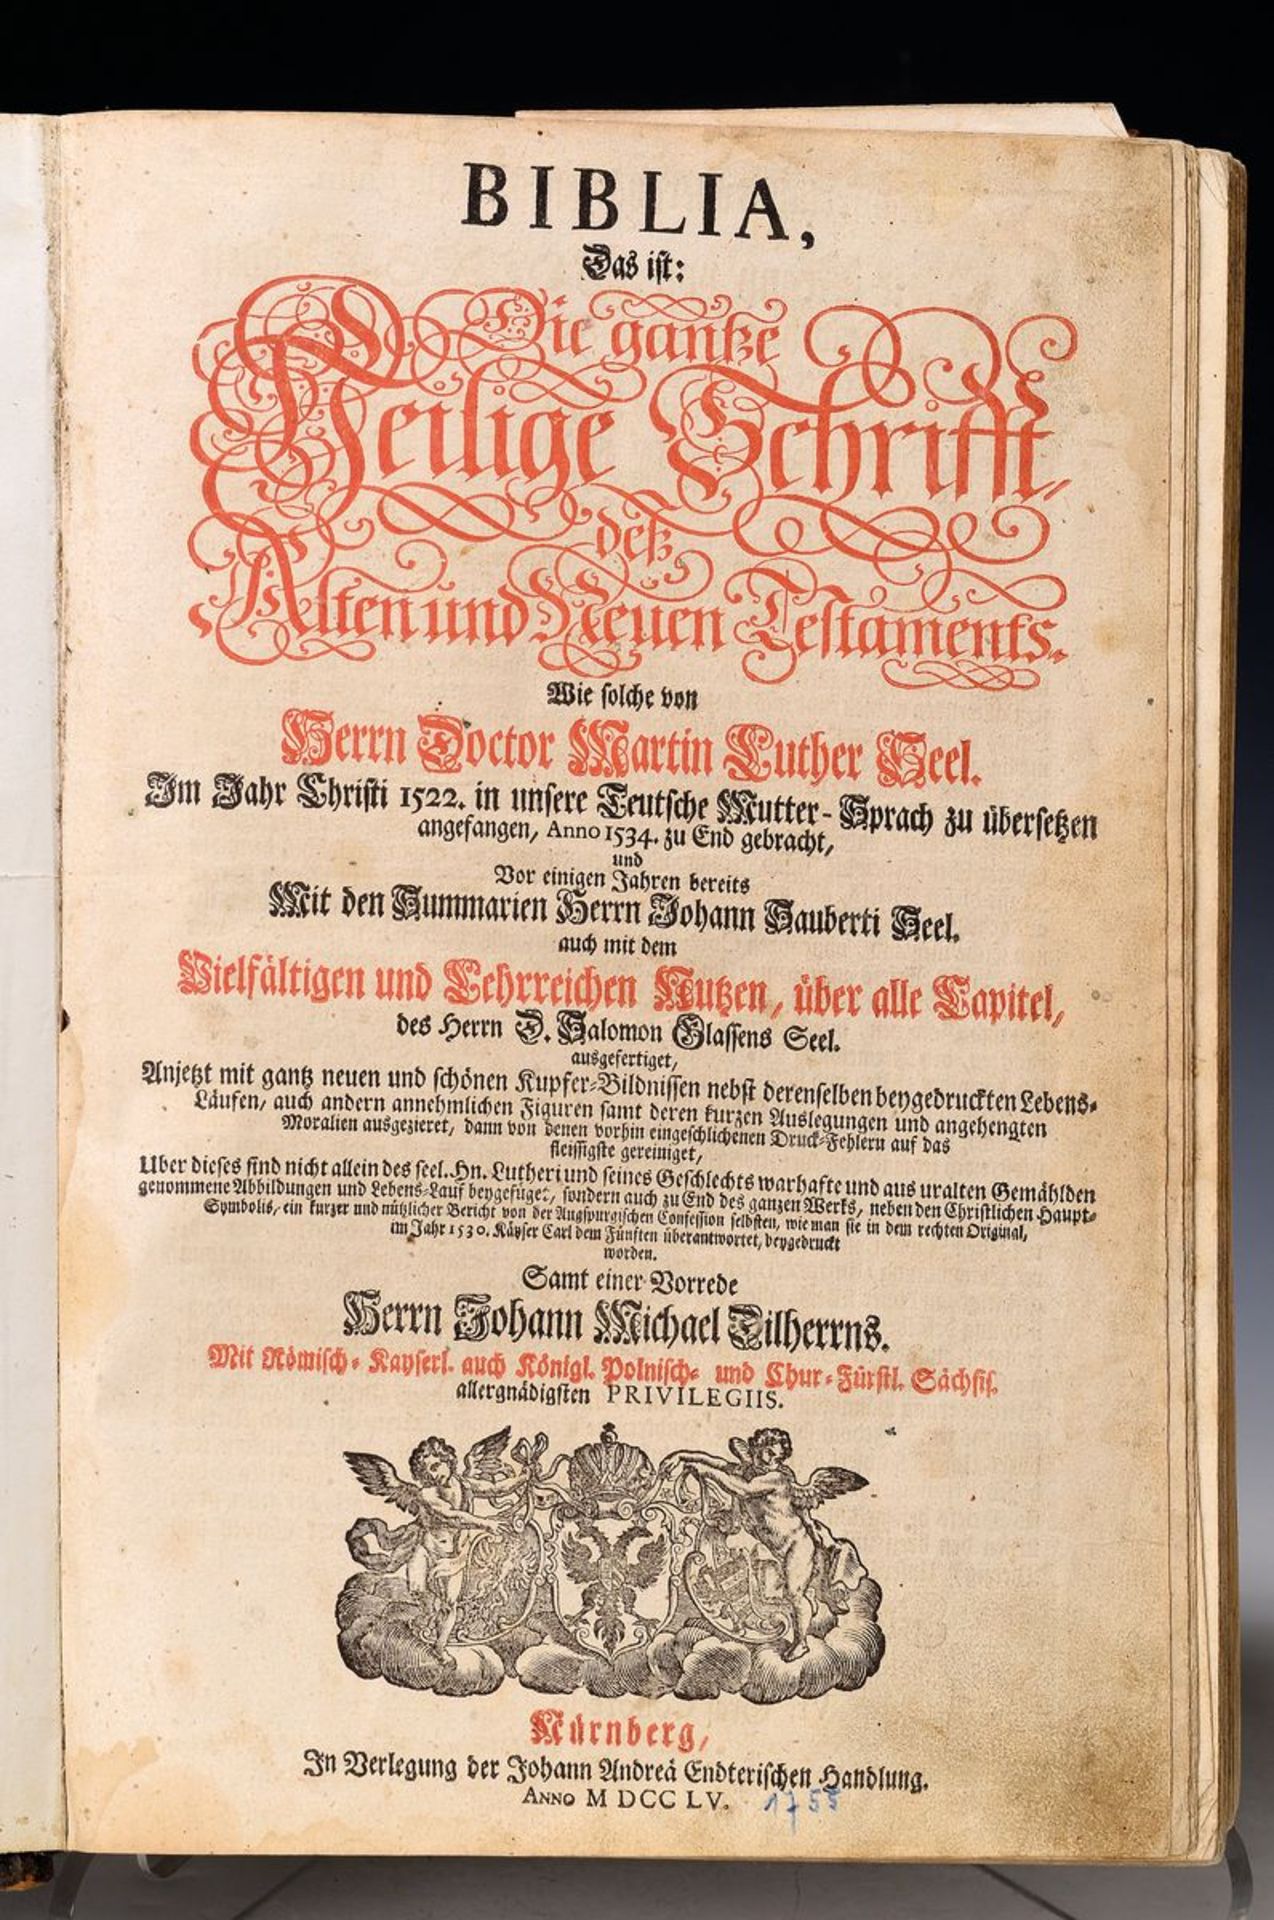 Endter Bibel, Nürnberg 1755, 'Biblia - Das ist die gantze